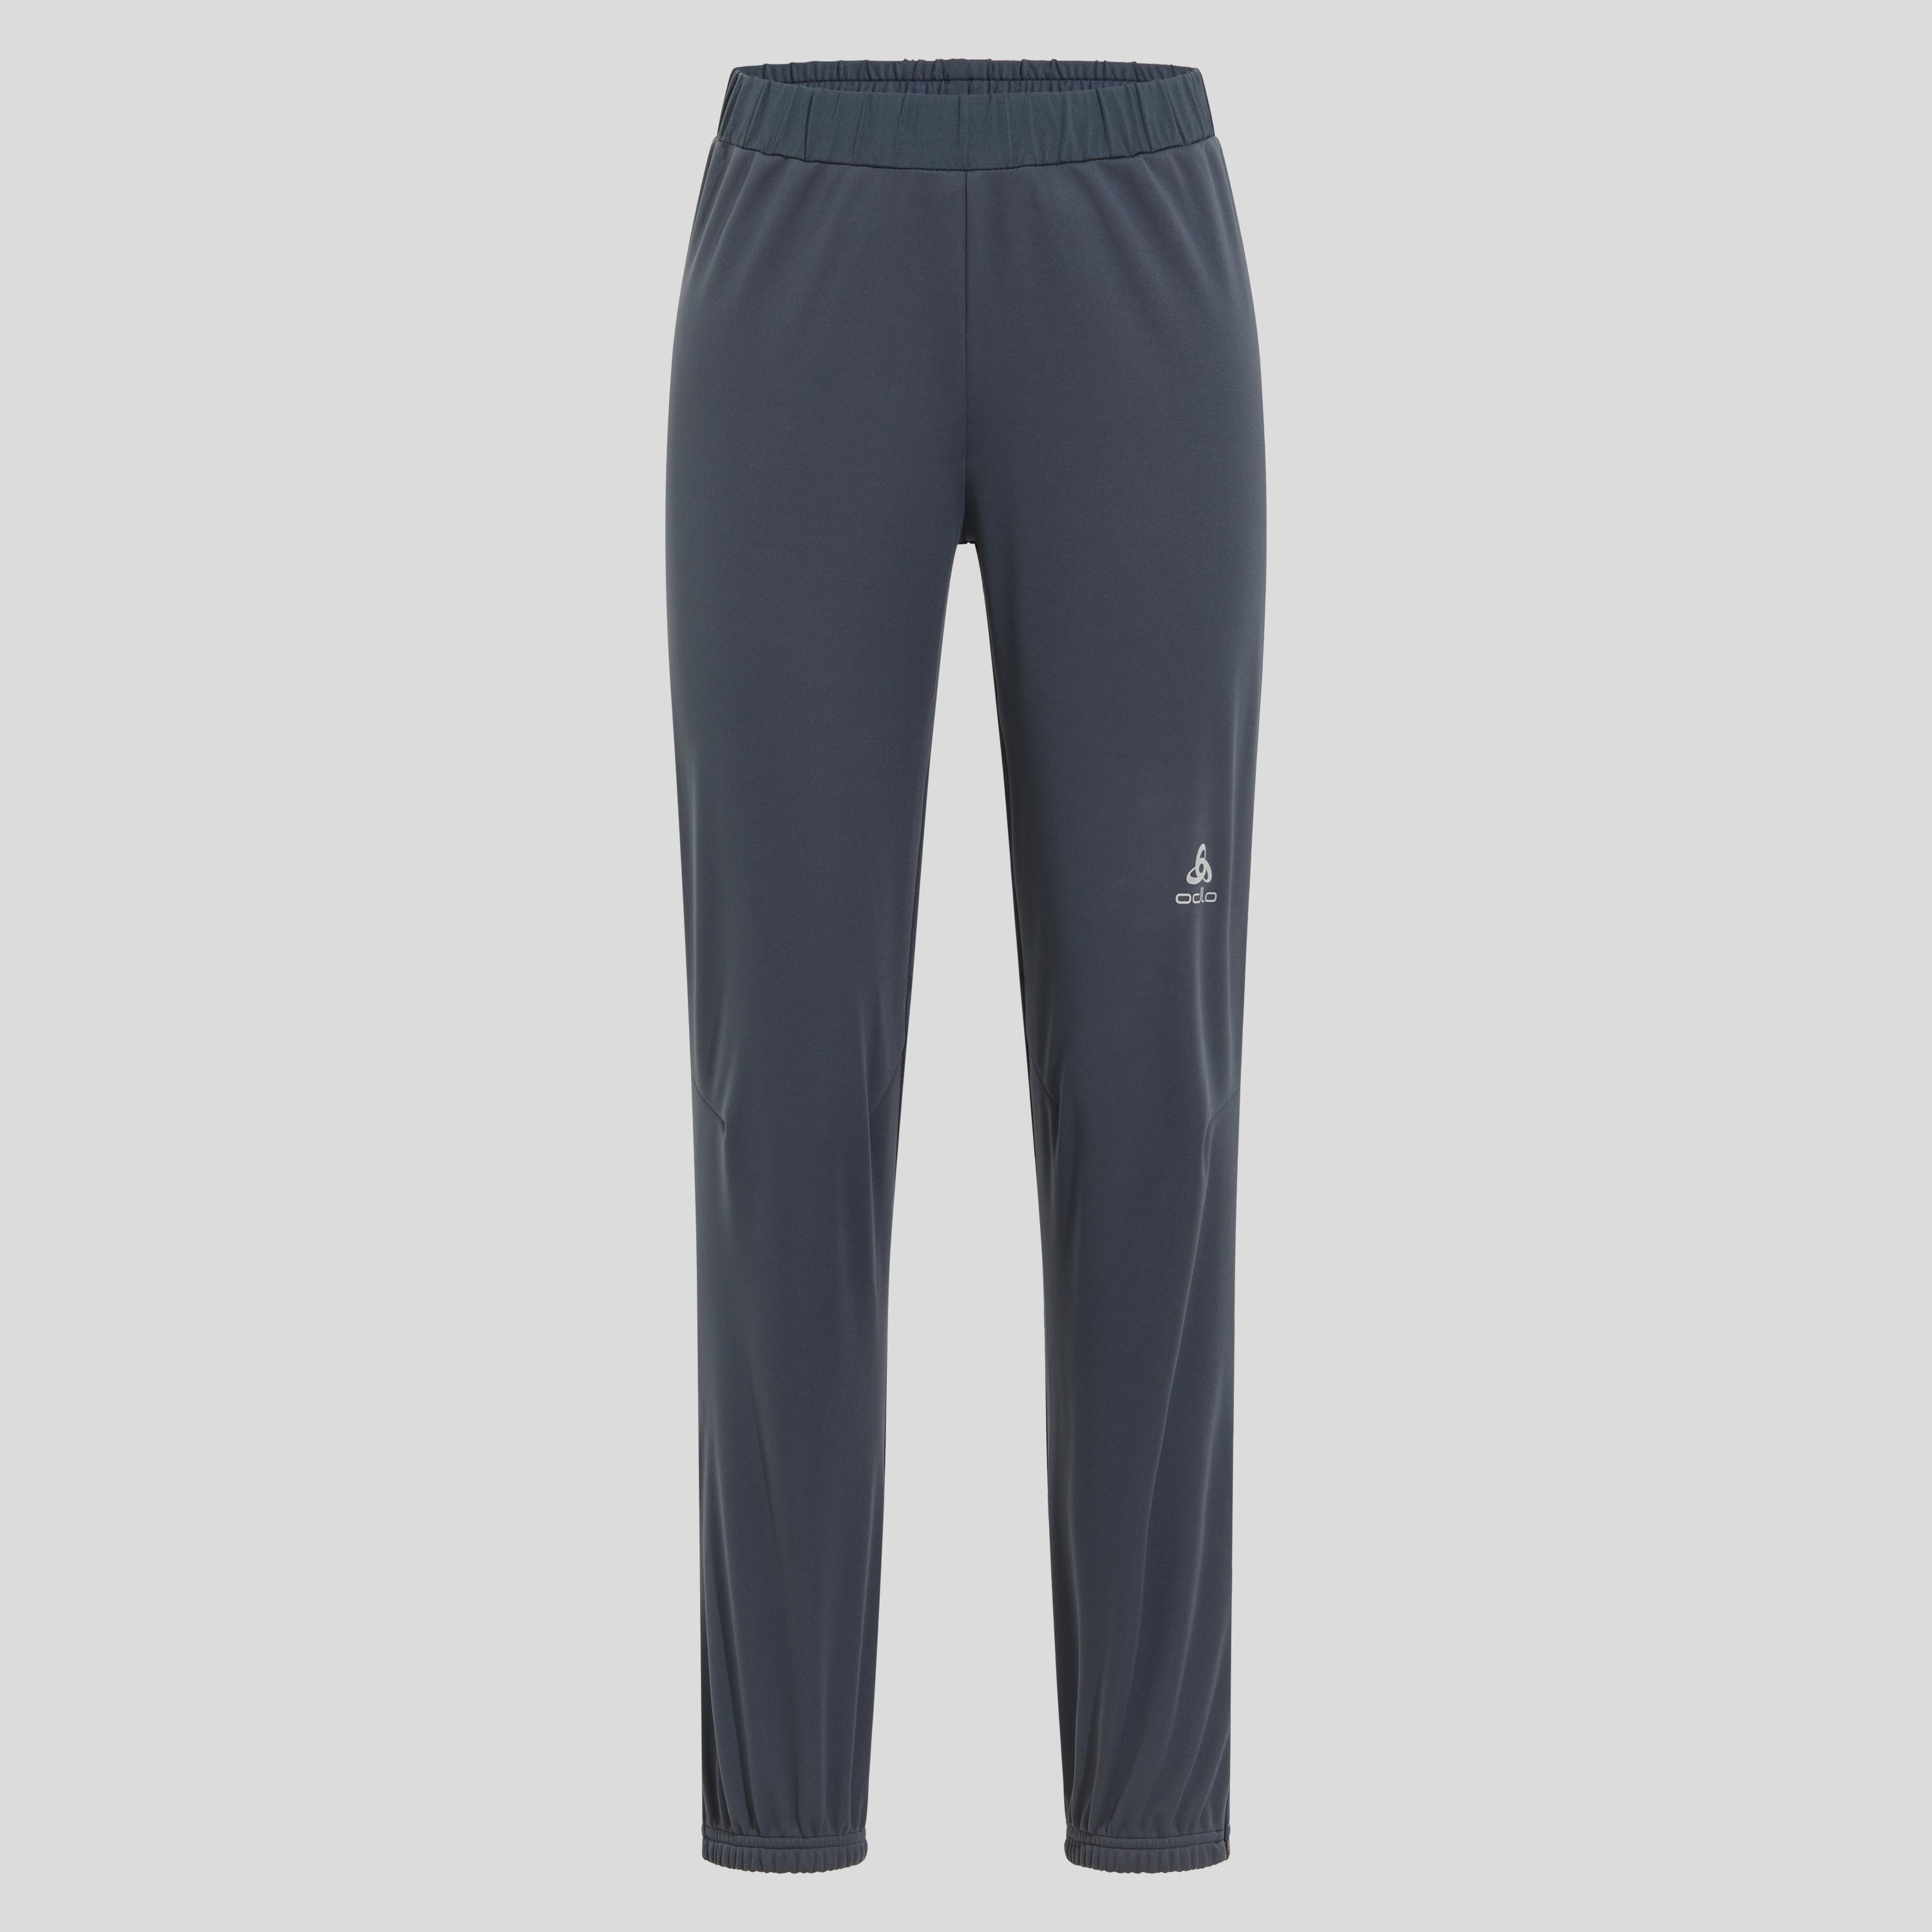 Odlo Pantalon de ski de fond Brensholmen pour femme, XL, bleu marine